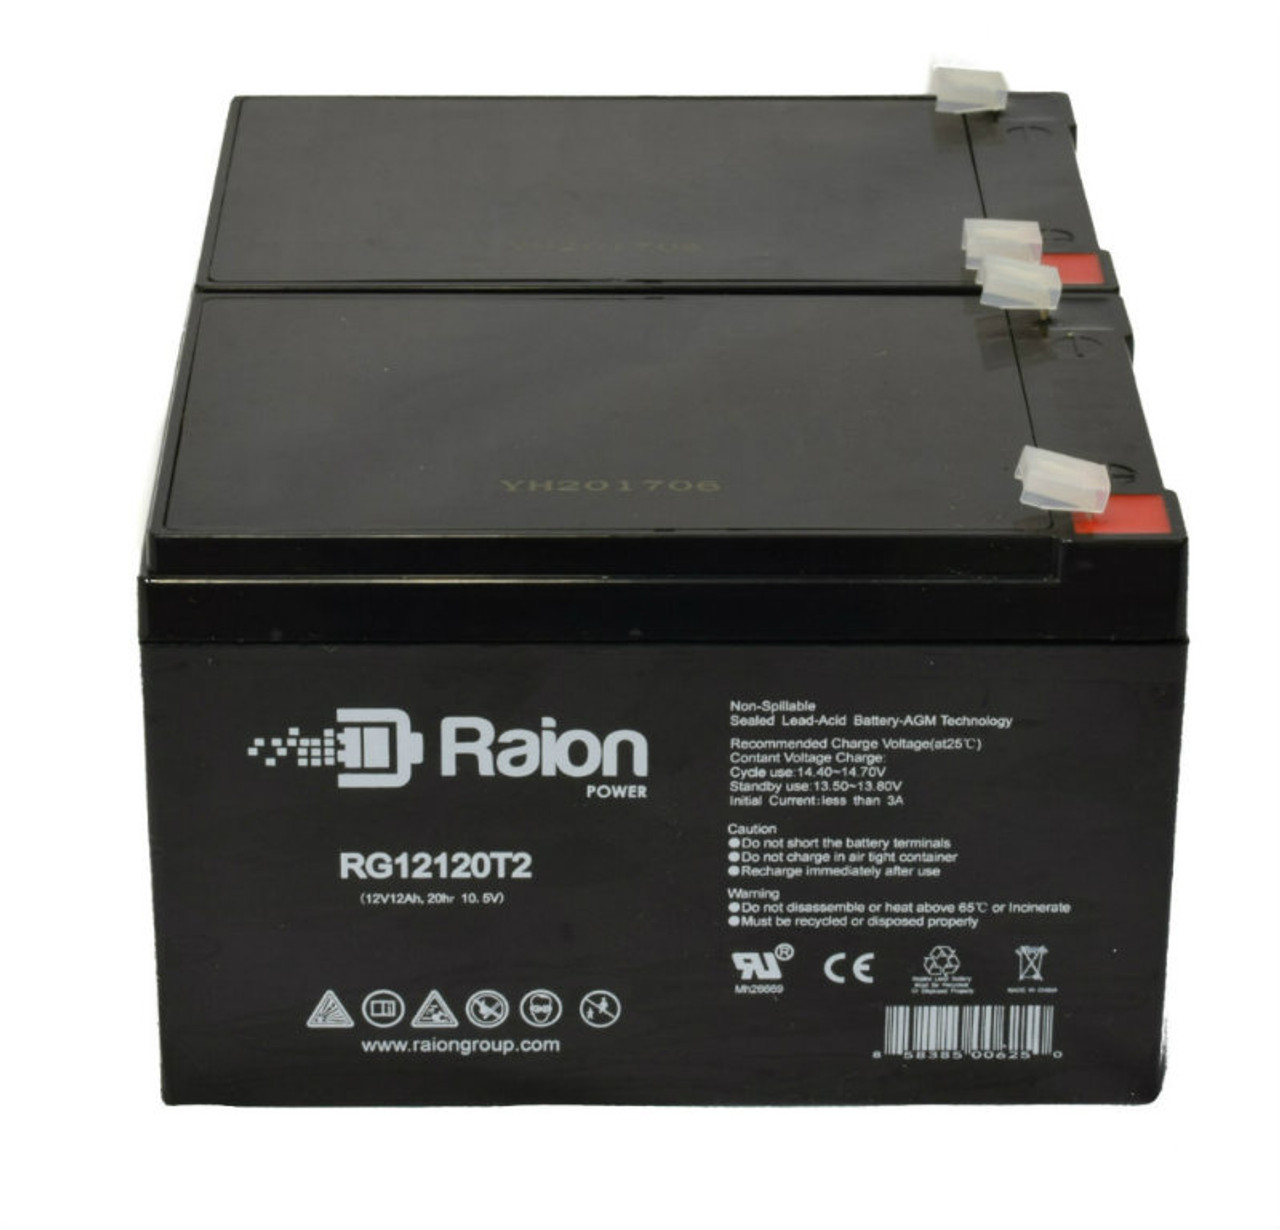 Raion Power 12V 12Ah Non-Spillable Compatible Replacement Battery for DET Power DT12V12Ah-D - (2 Pack)